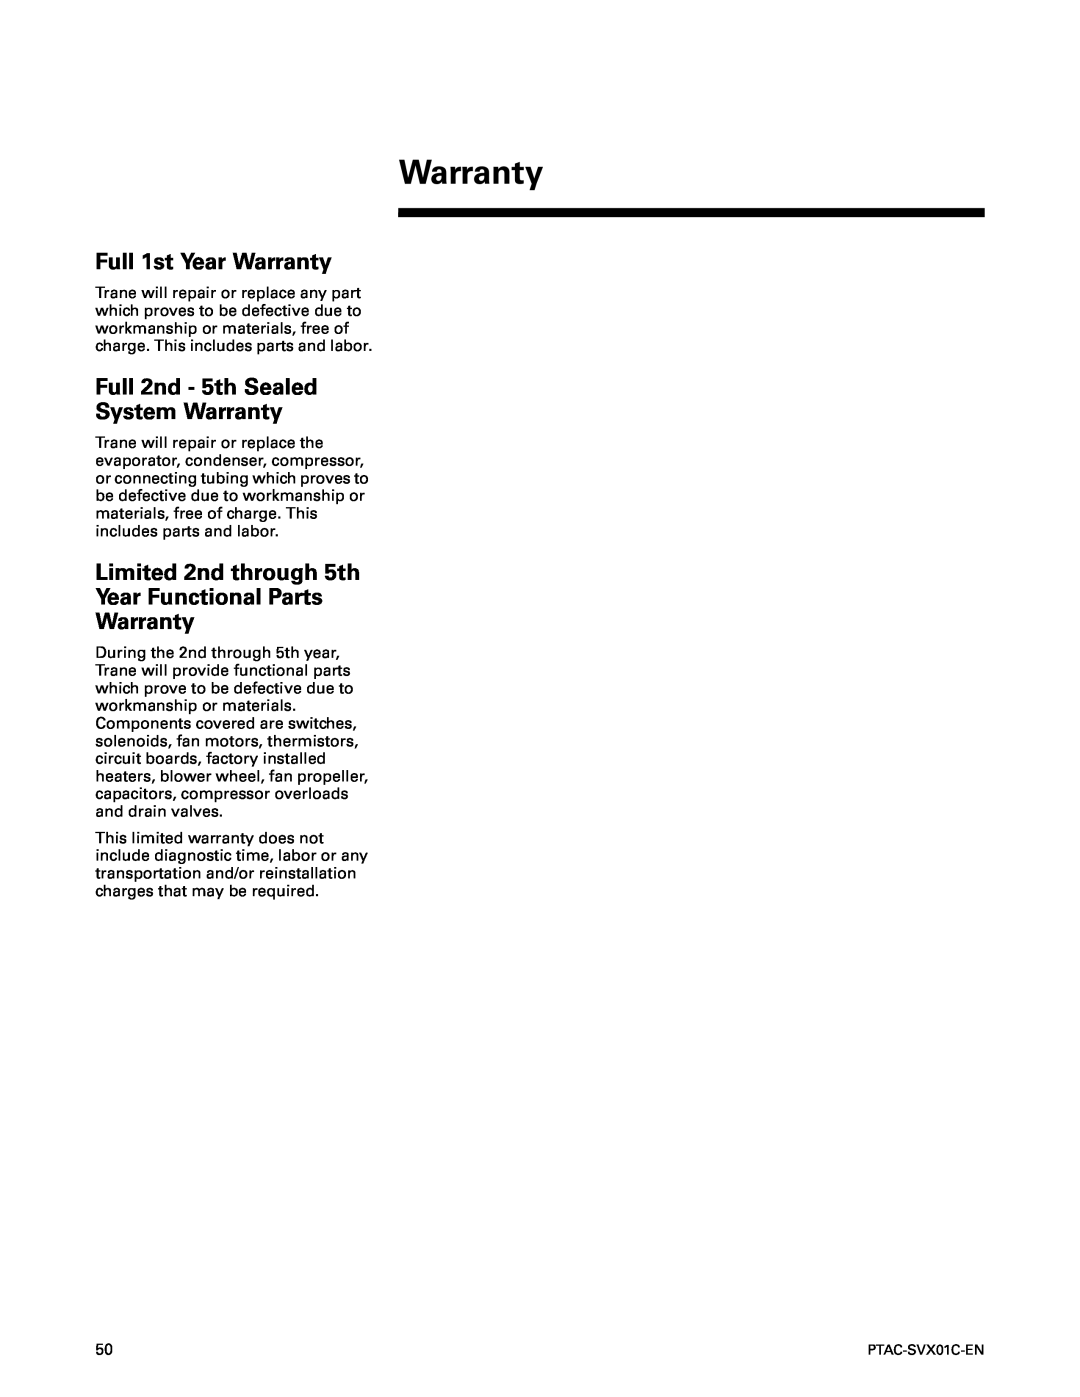 Trane PTAC-SVX01C-EN manual Full 1st Year Warranty, Full 2nd - 5th Sealed System Warranty 